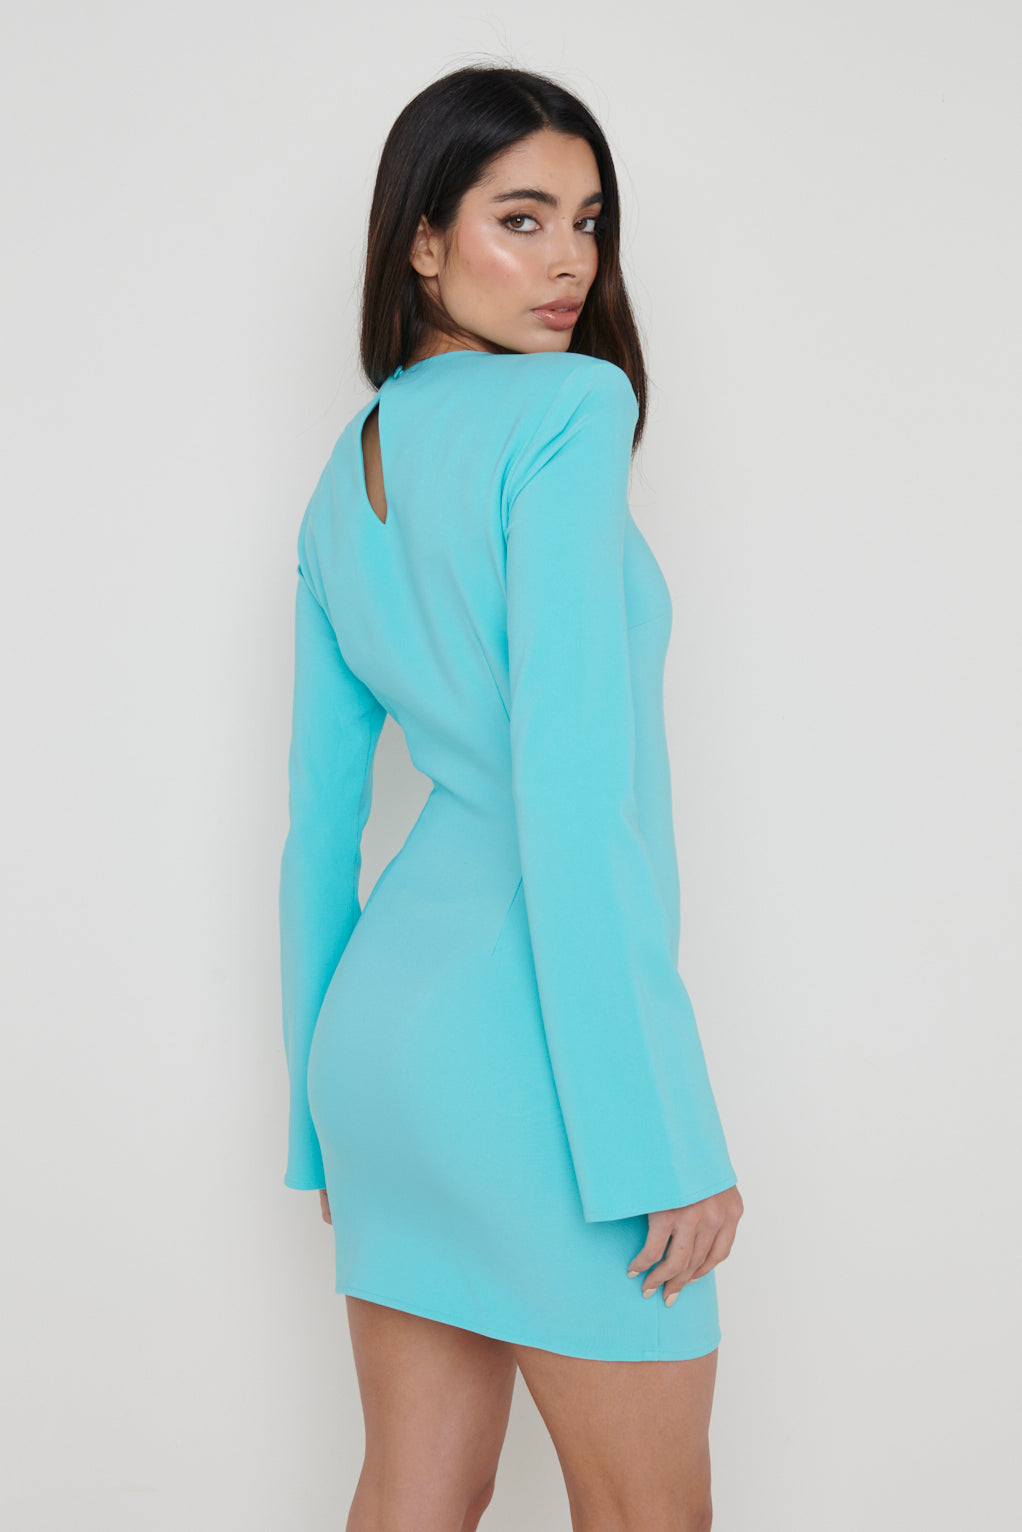 Charlene Long Sleeve Crew Neck Mini Dress Turquoise